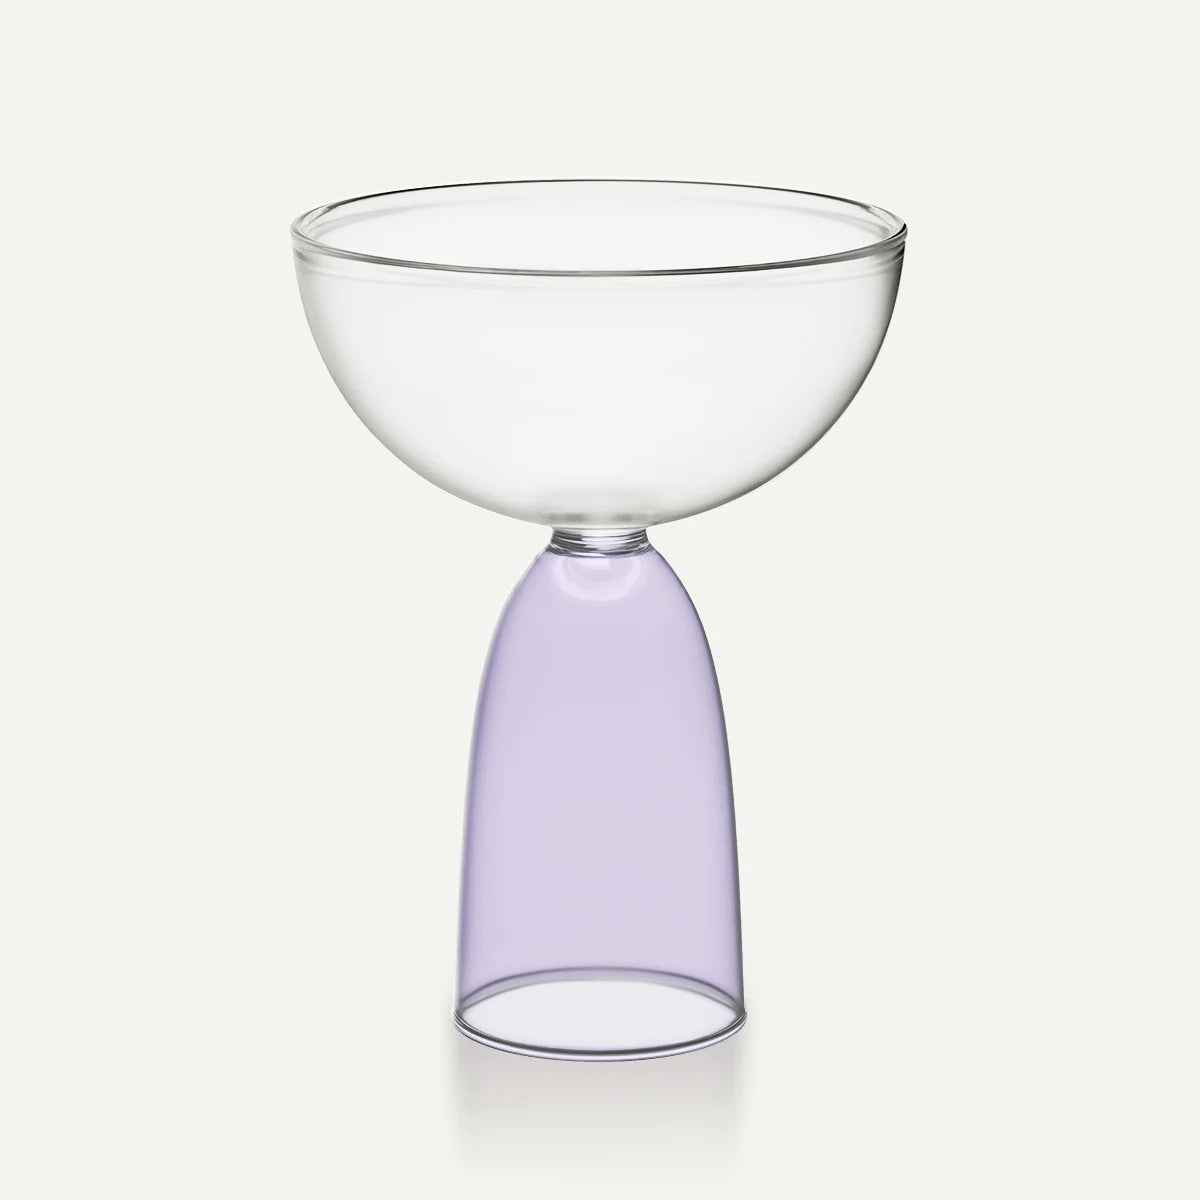 Mamo Coupe Cocktail Glass - Halftone